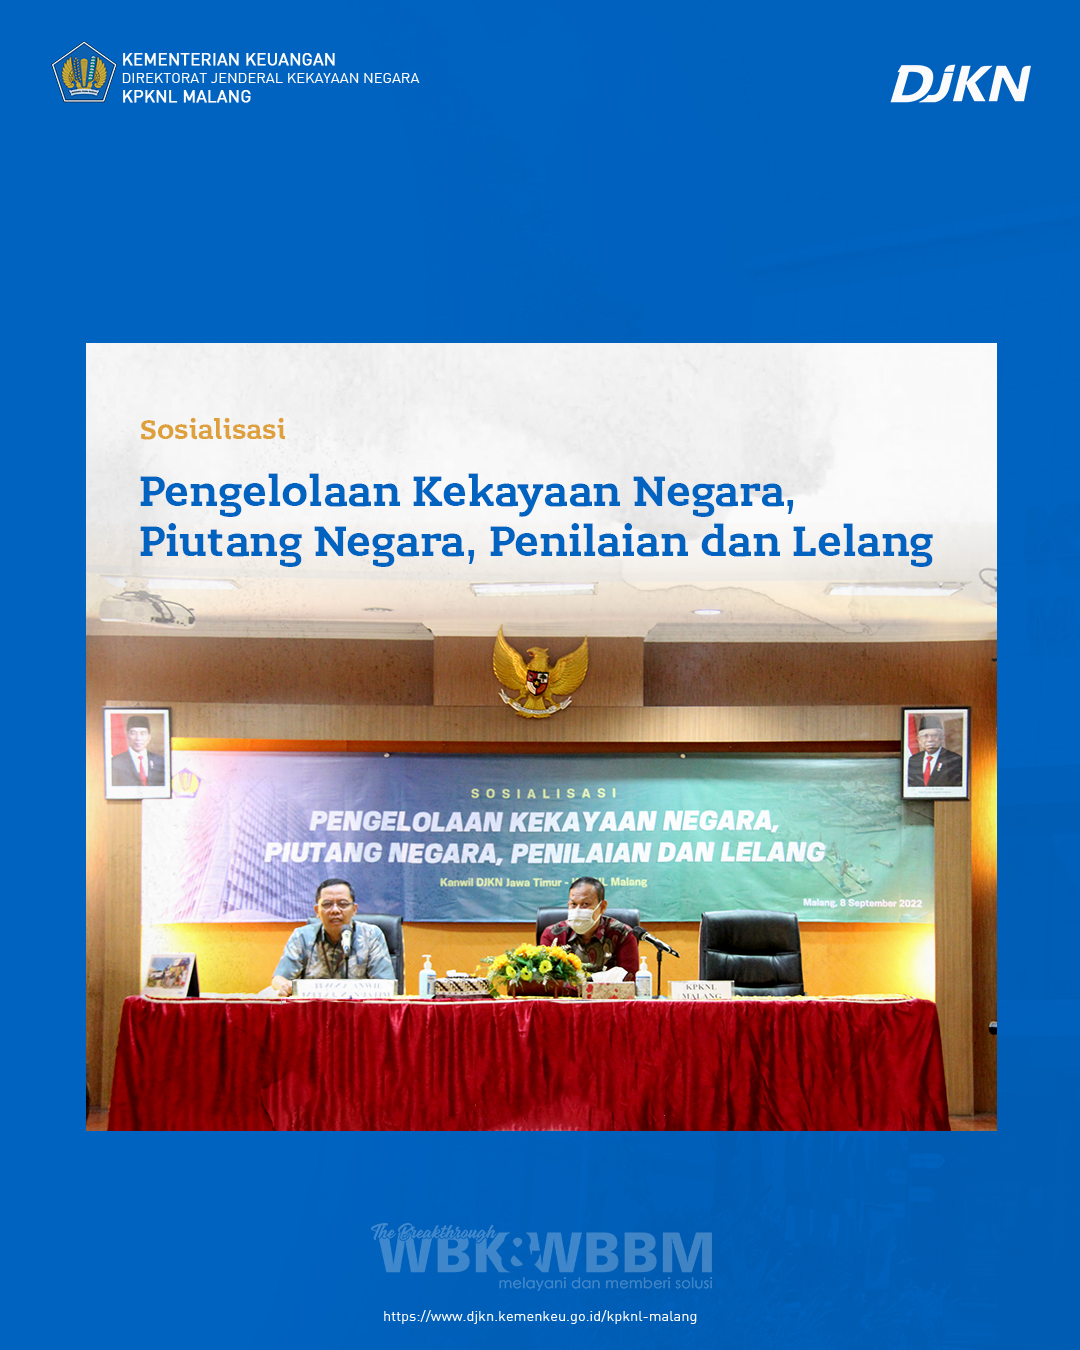 Perkuat Sinergi dan Kolaborasi Pelayanan DJKN, KPKNL Malang Undang Pemerintah Daerah se Malang Raya